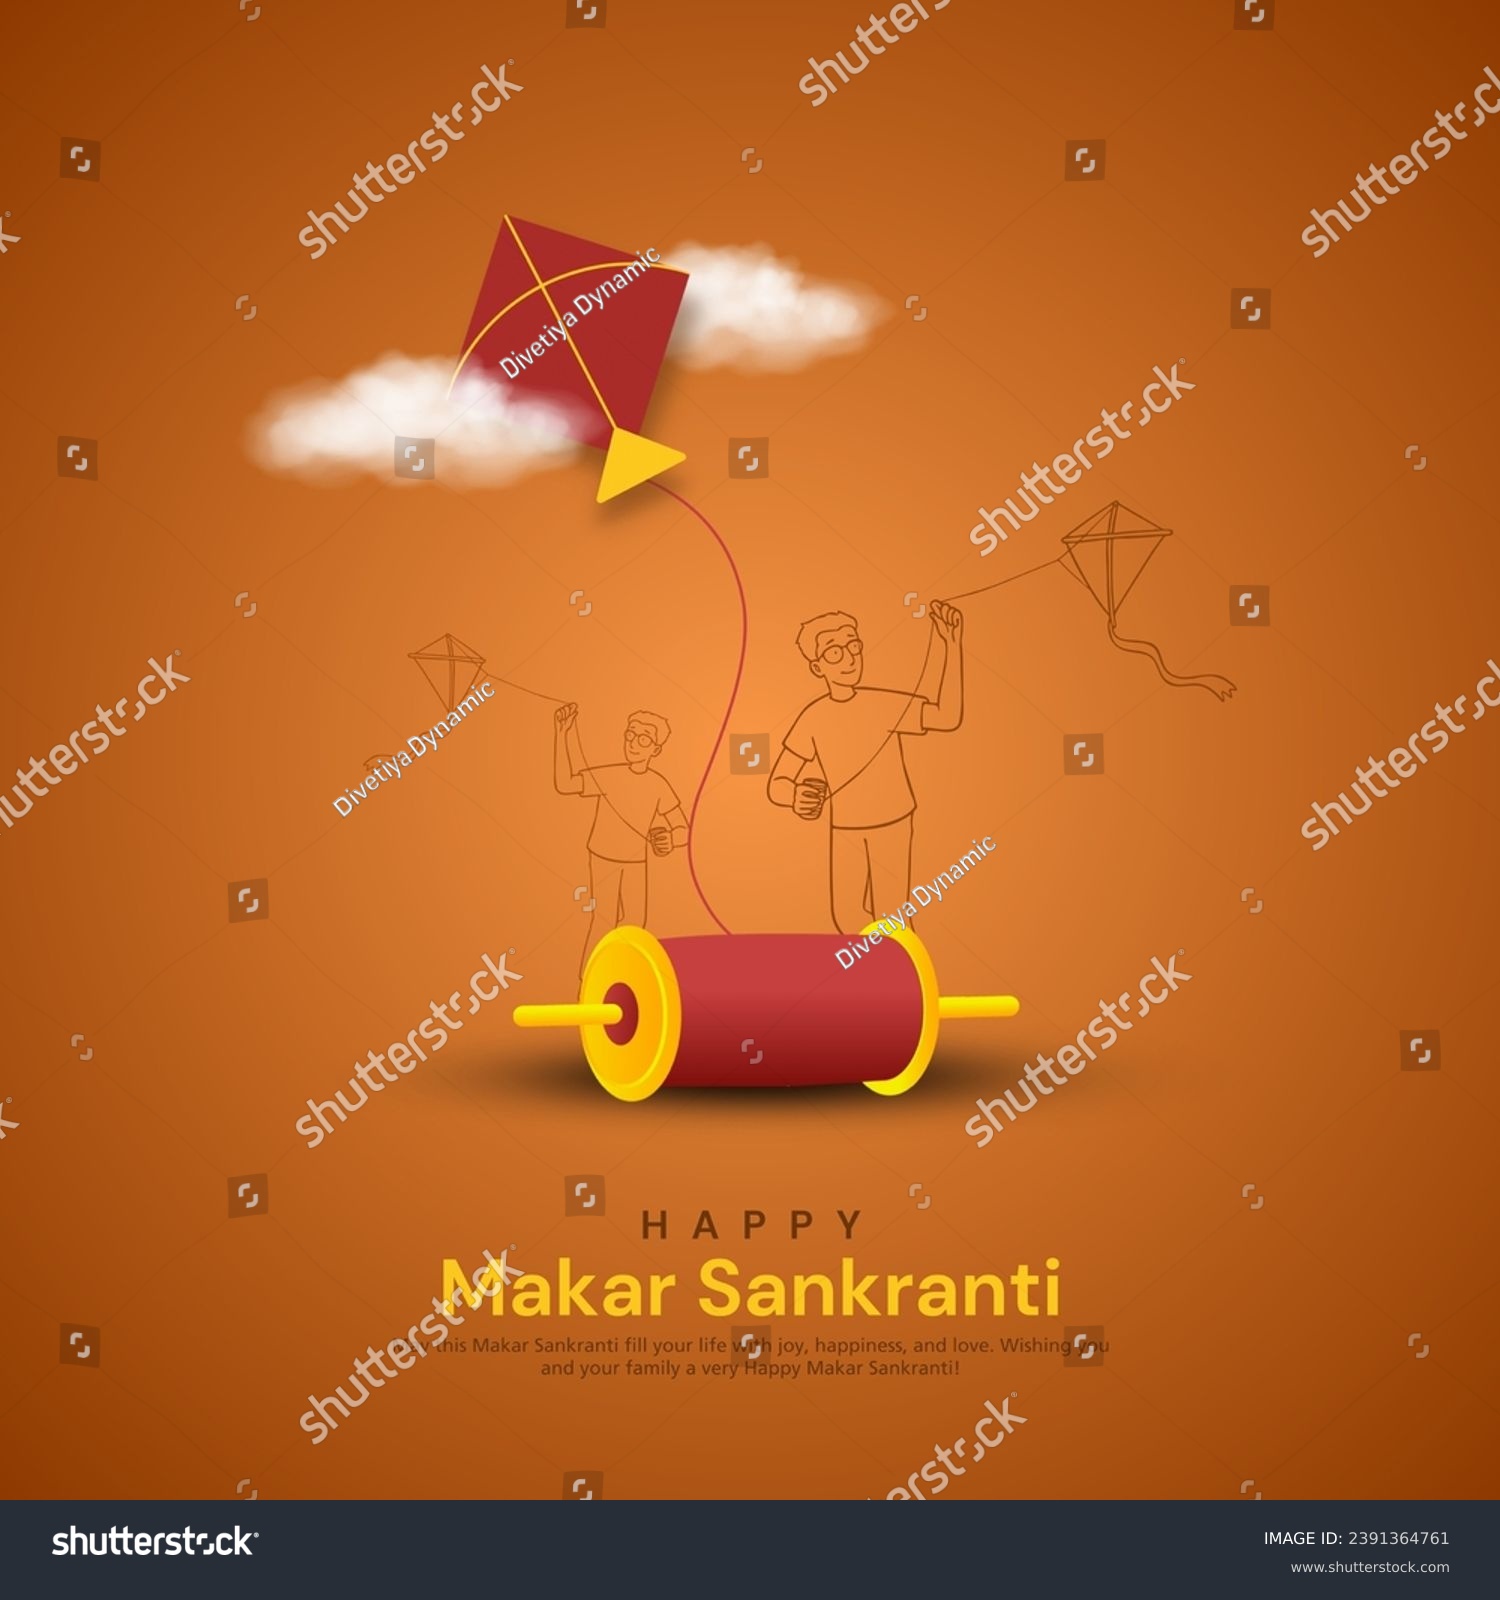 SVG of Makar sankranti boy flying kite line drawing with string spool and kite. Creative vector illustration. svg